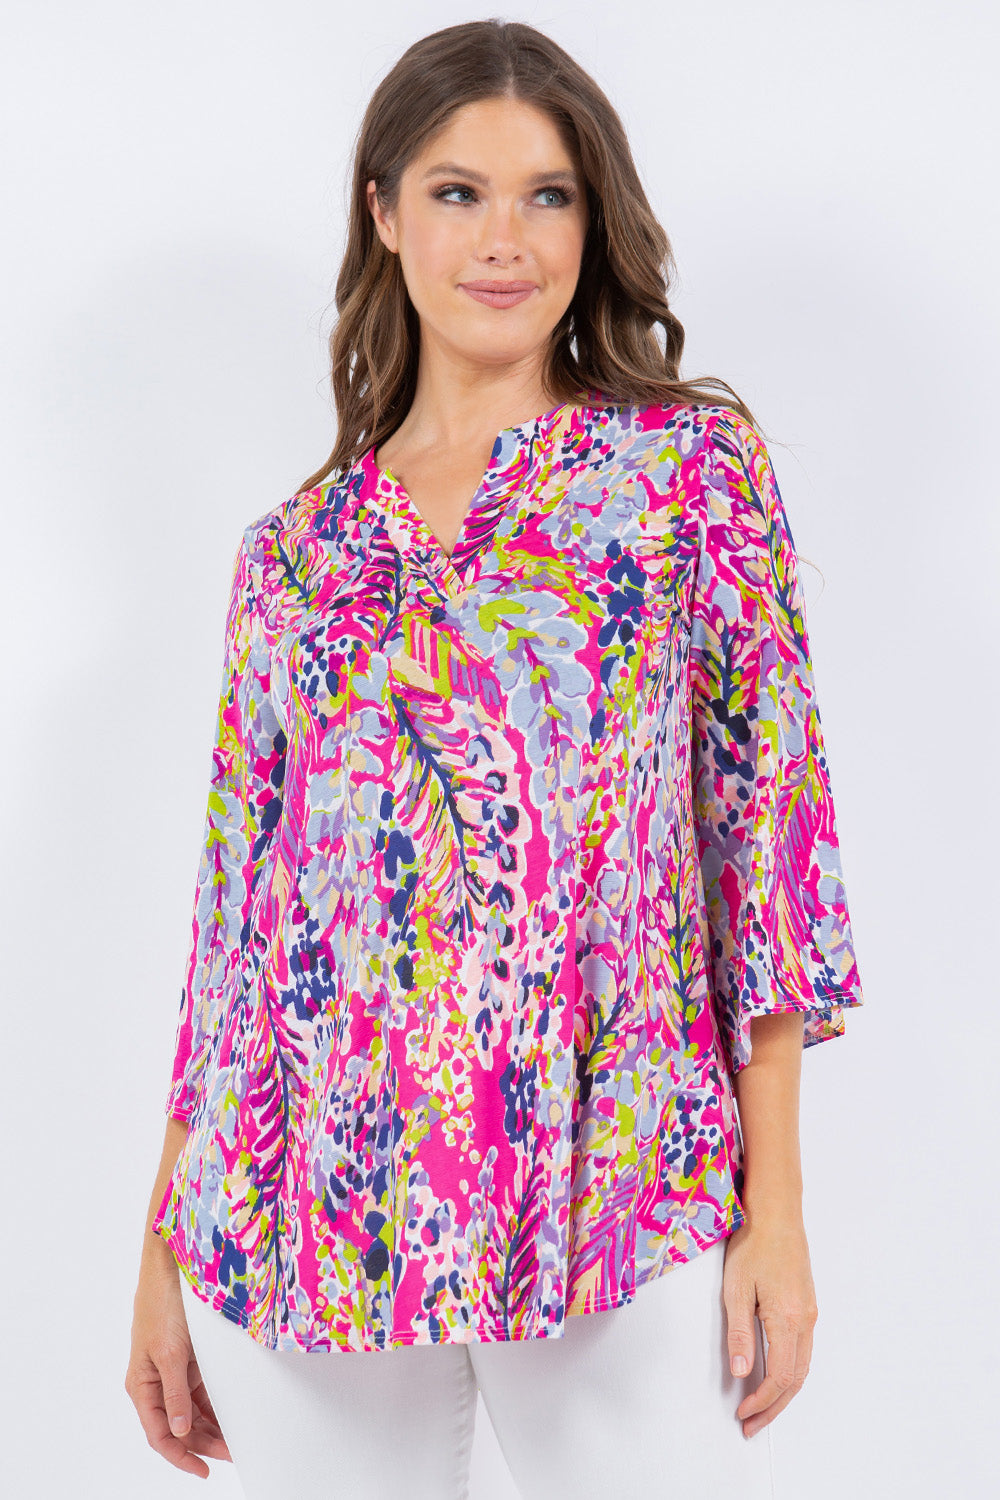 boutique shopping pensacola floral top blouse clothing v-neck long sleeve 